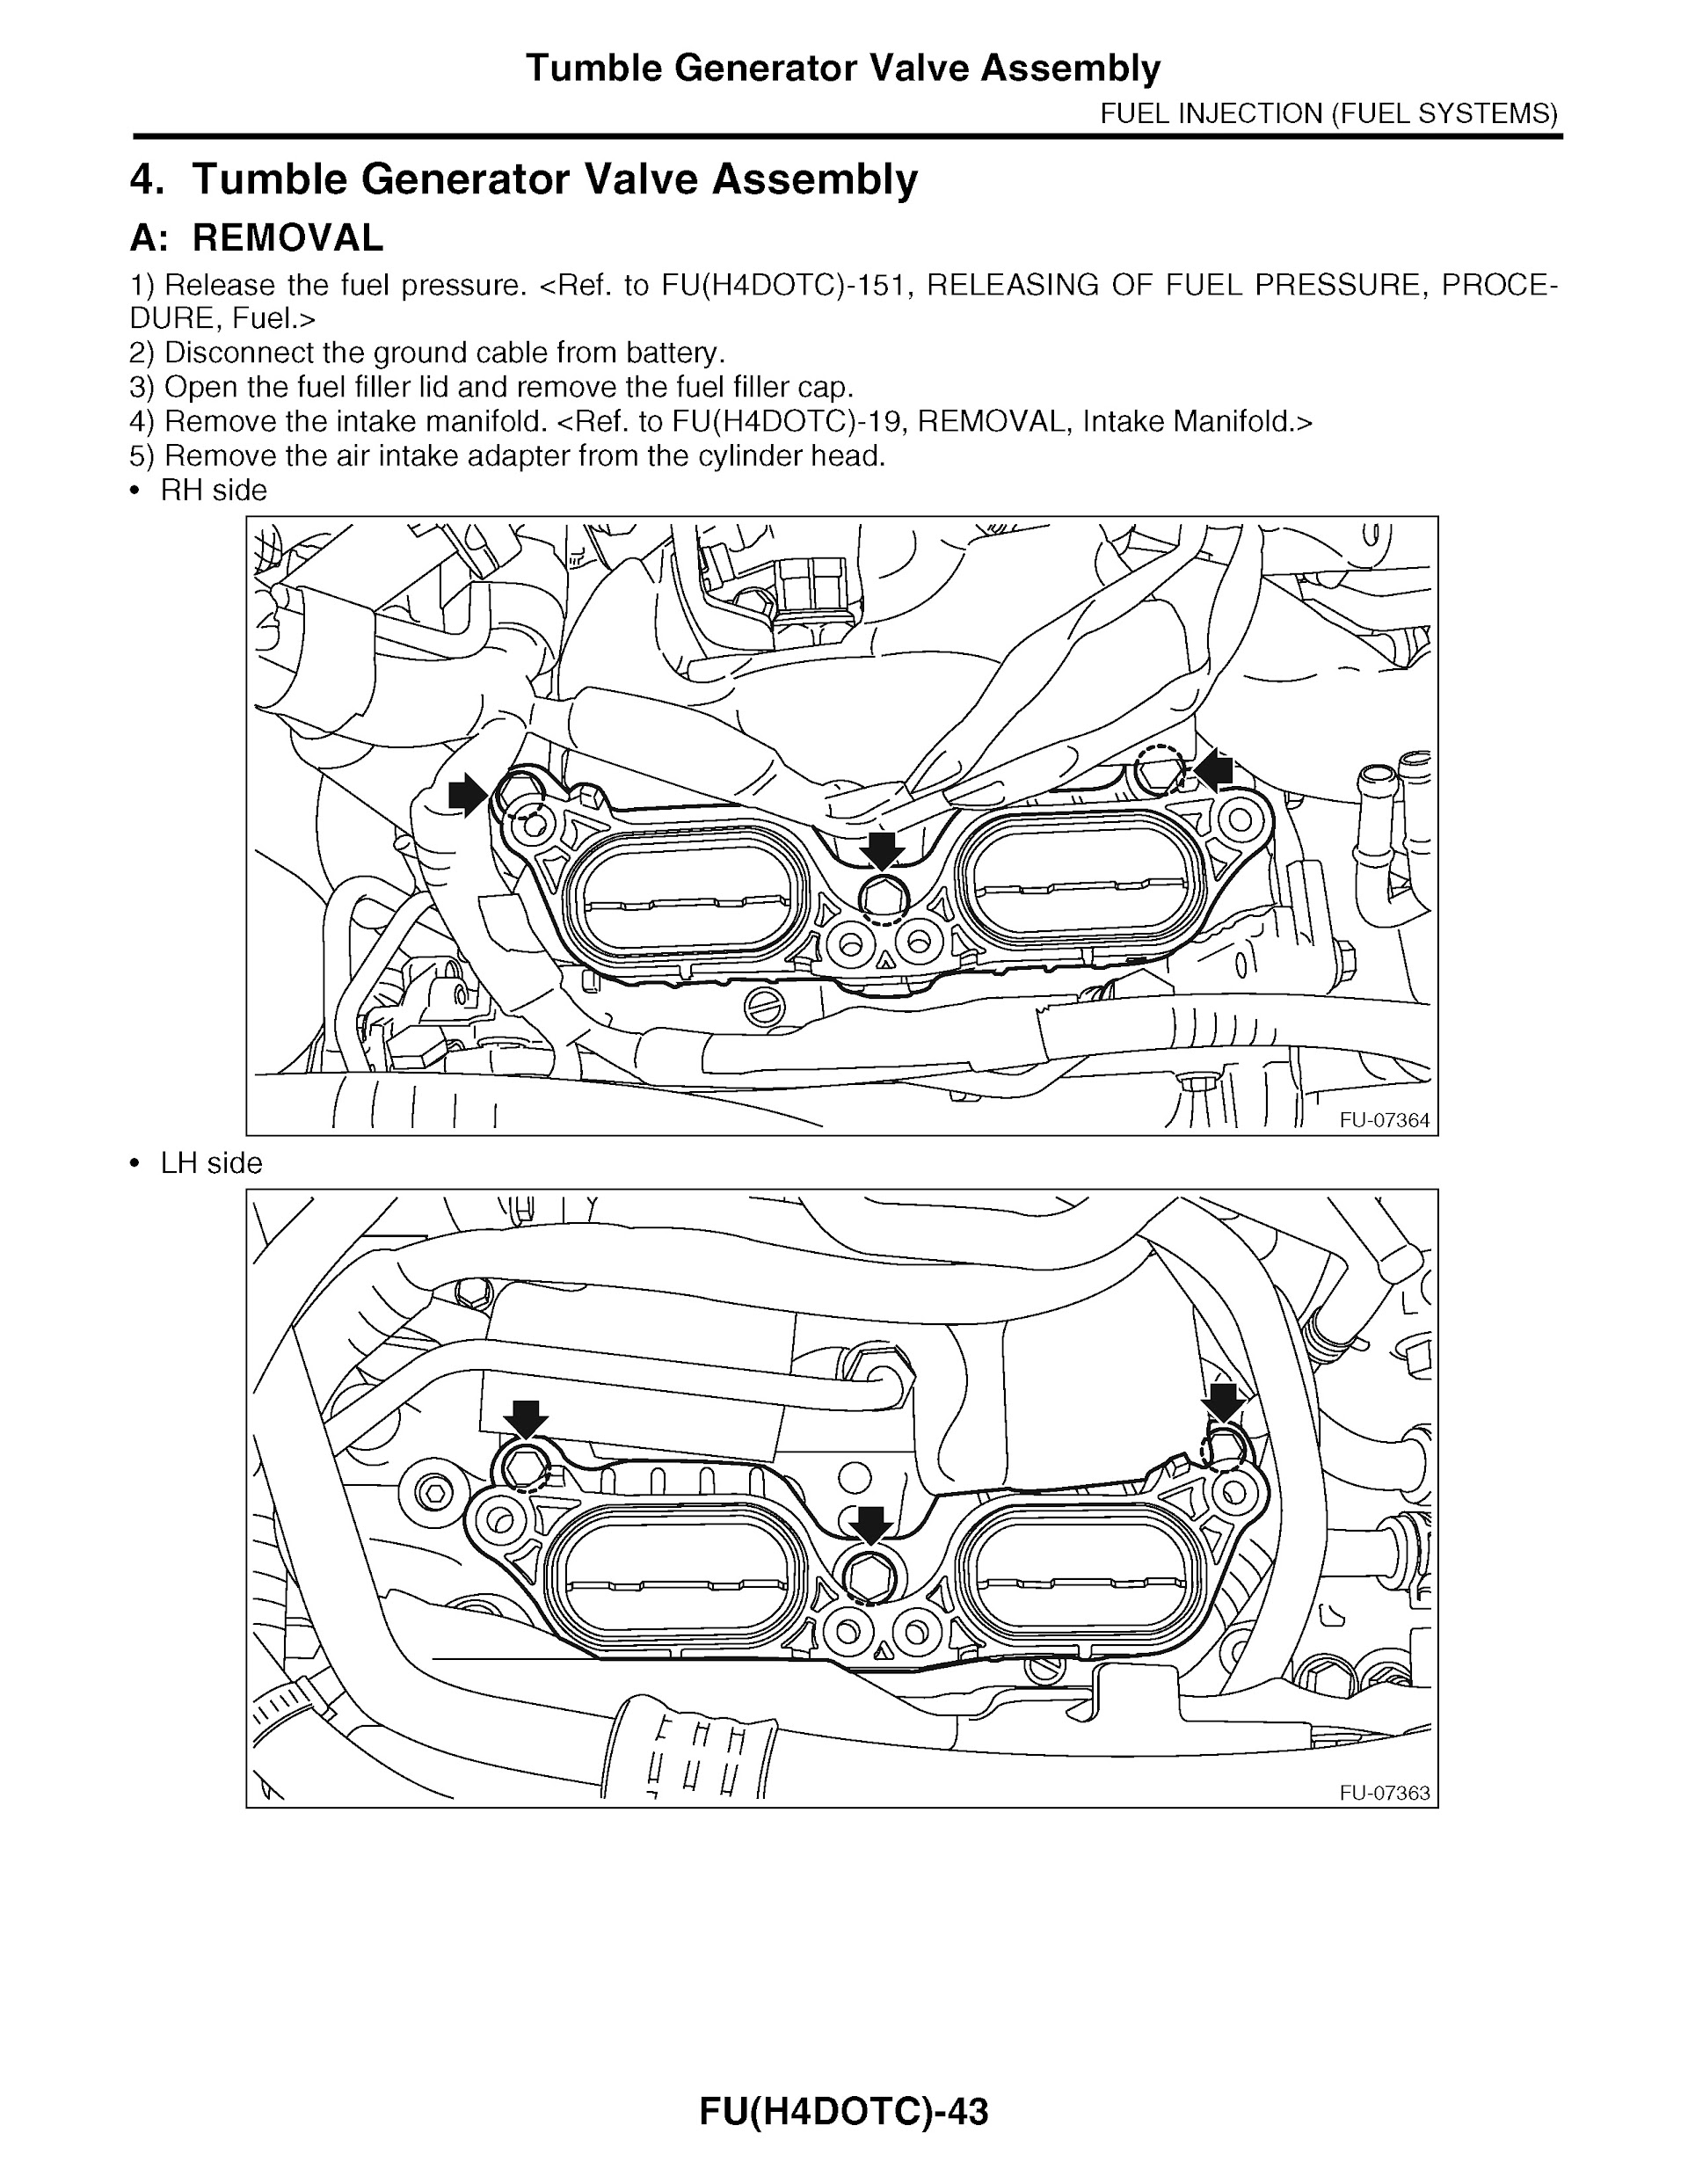 2014 Subaru Forester Repair Manual Tumble Generator Valve Assembly